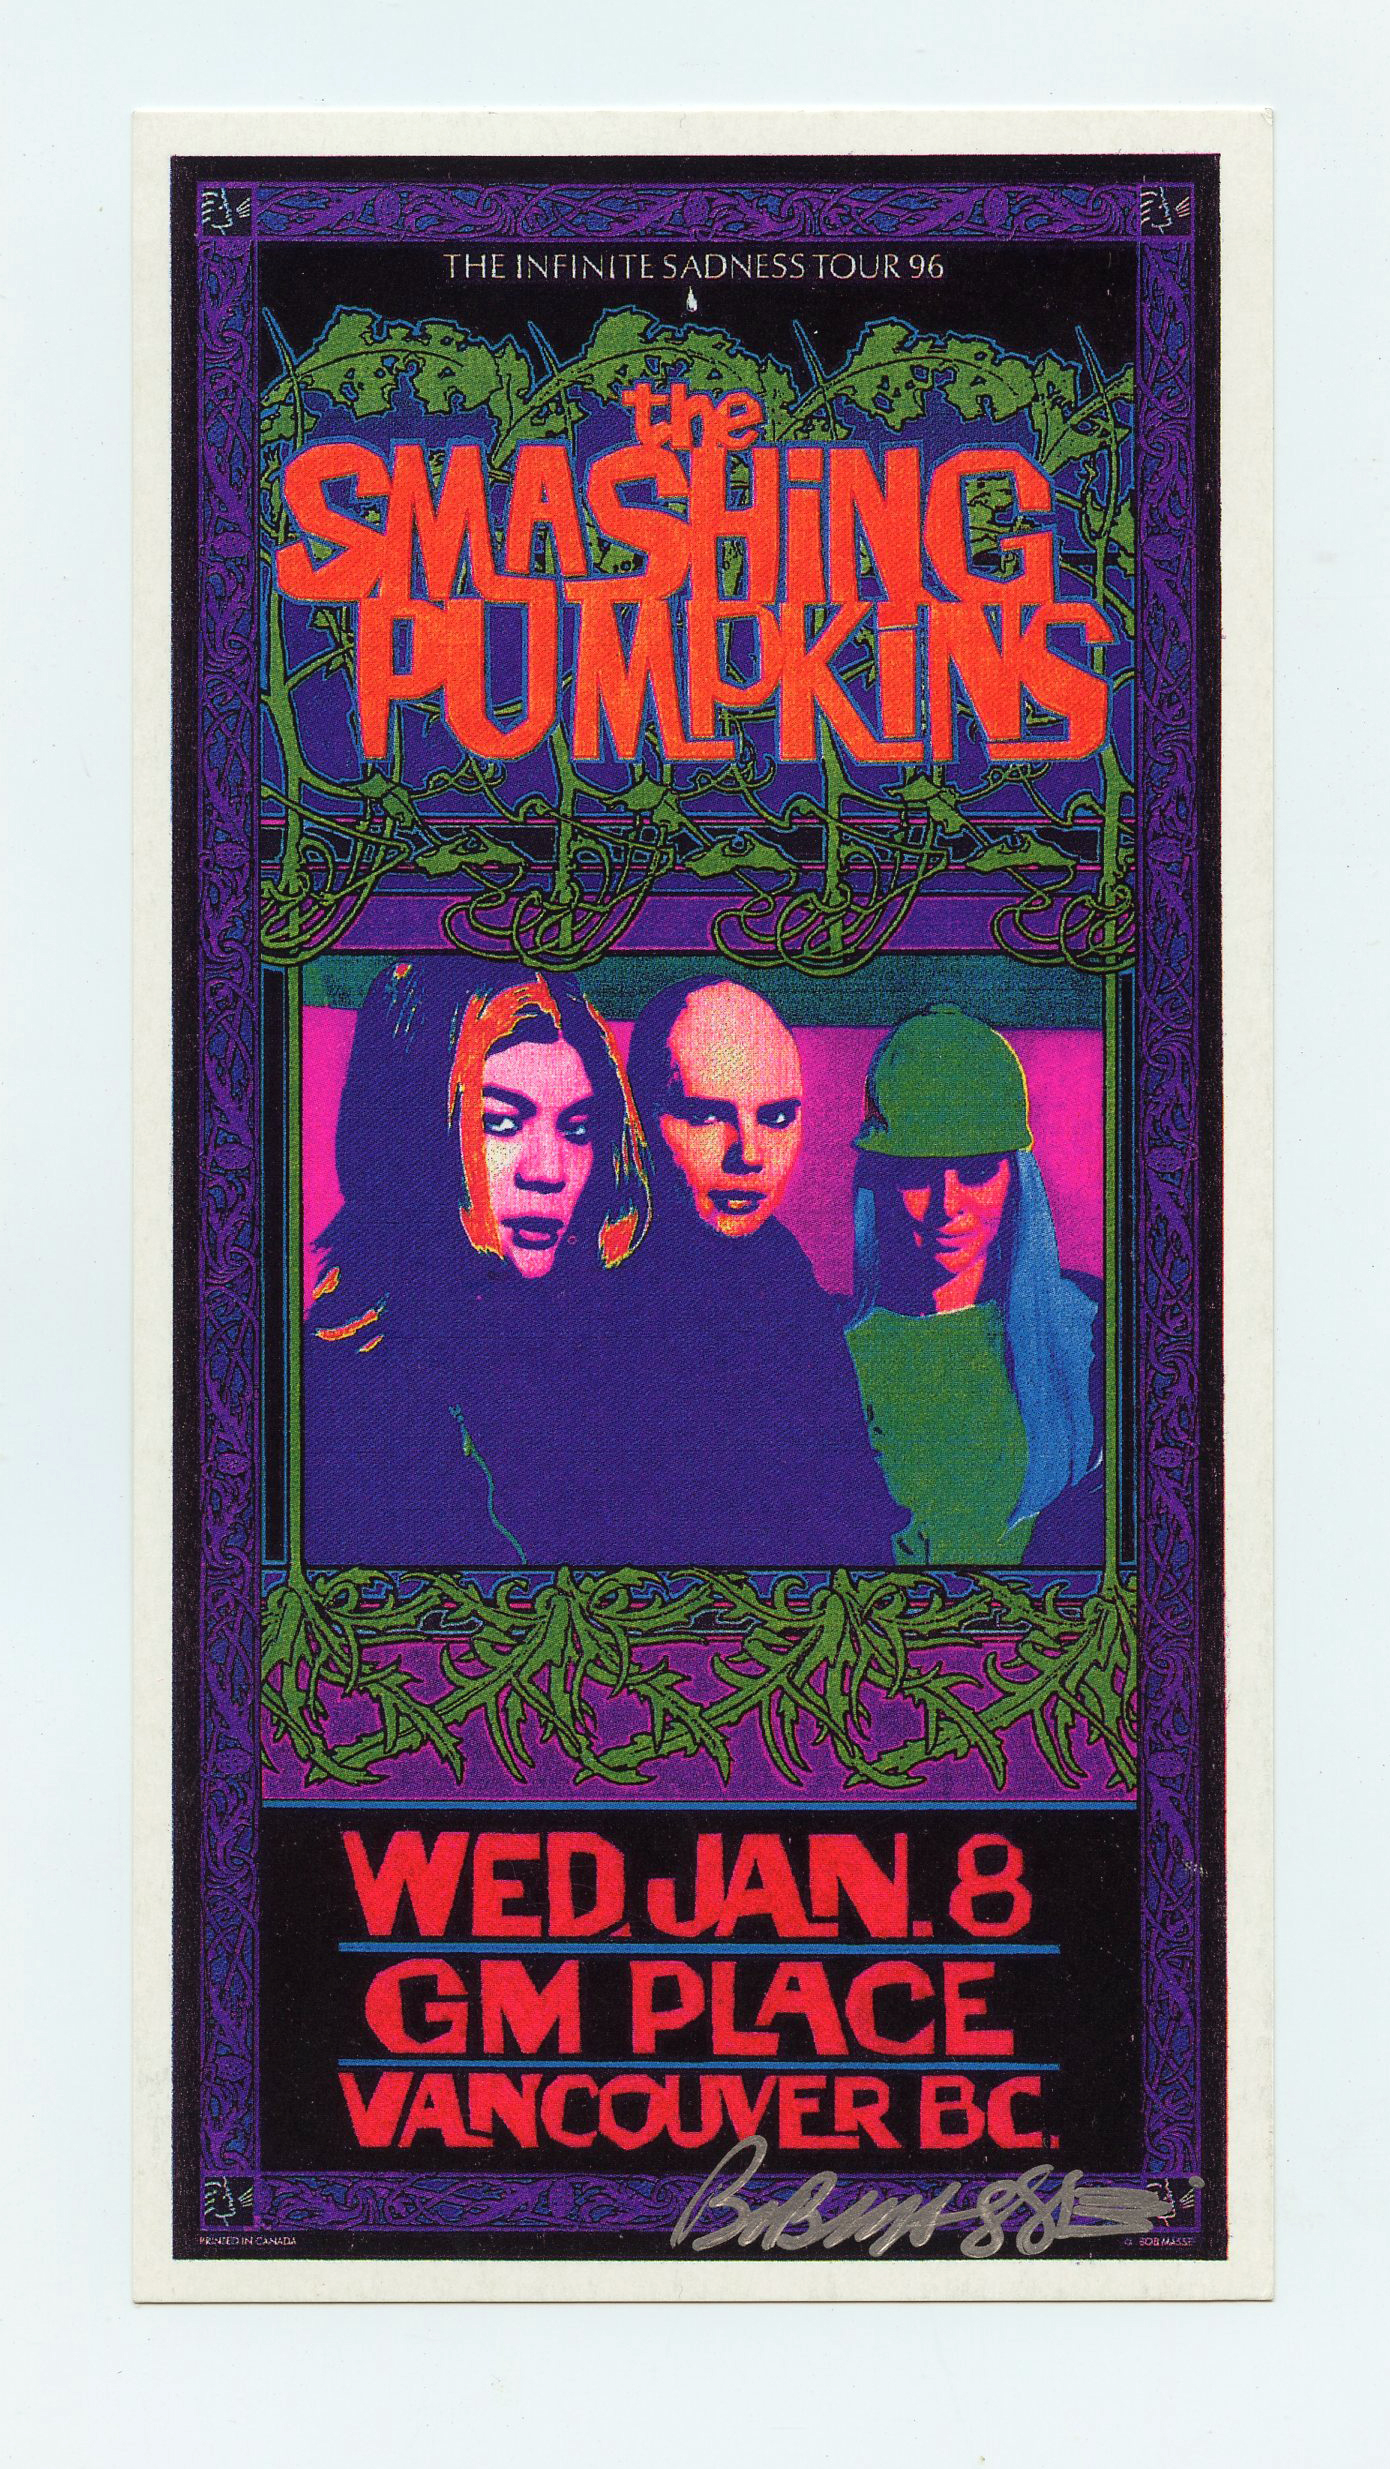 Smashing Pumpkins Handbill 1996 Jan 8 GM Place Vancouver